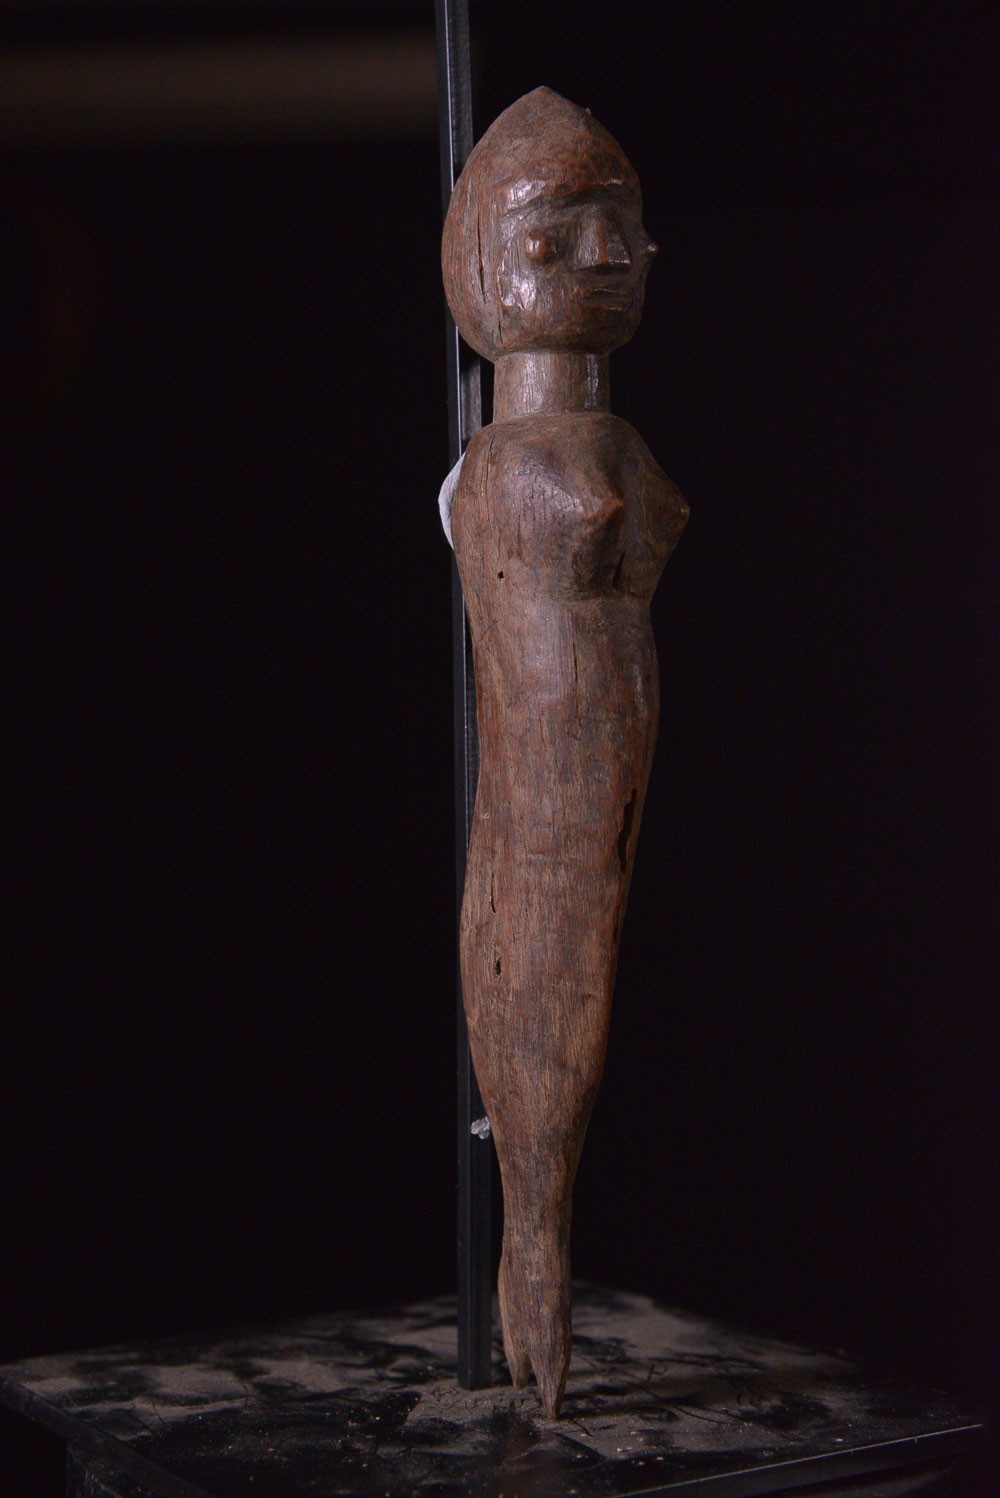 Sirène figurine du culte de Mami Wata - Lobi - Burkina Faso